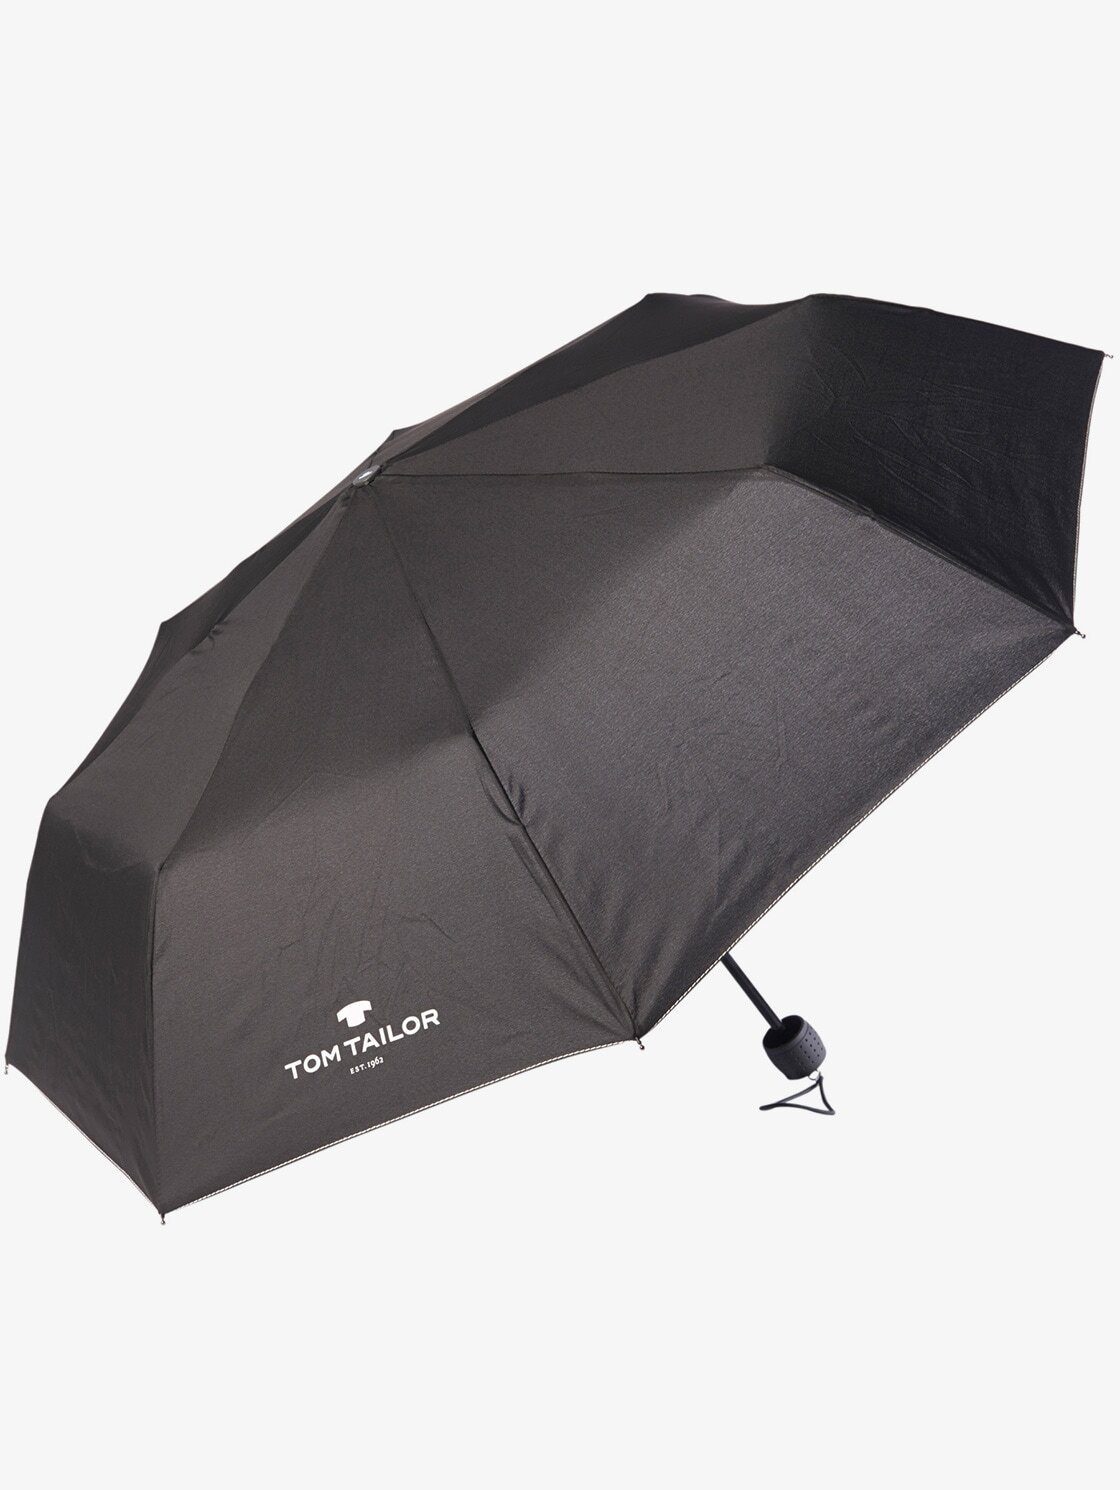 Taschenregenschirm Extra kleiner TAILOR Regenschirm TOM